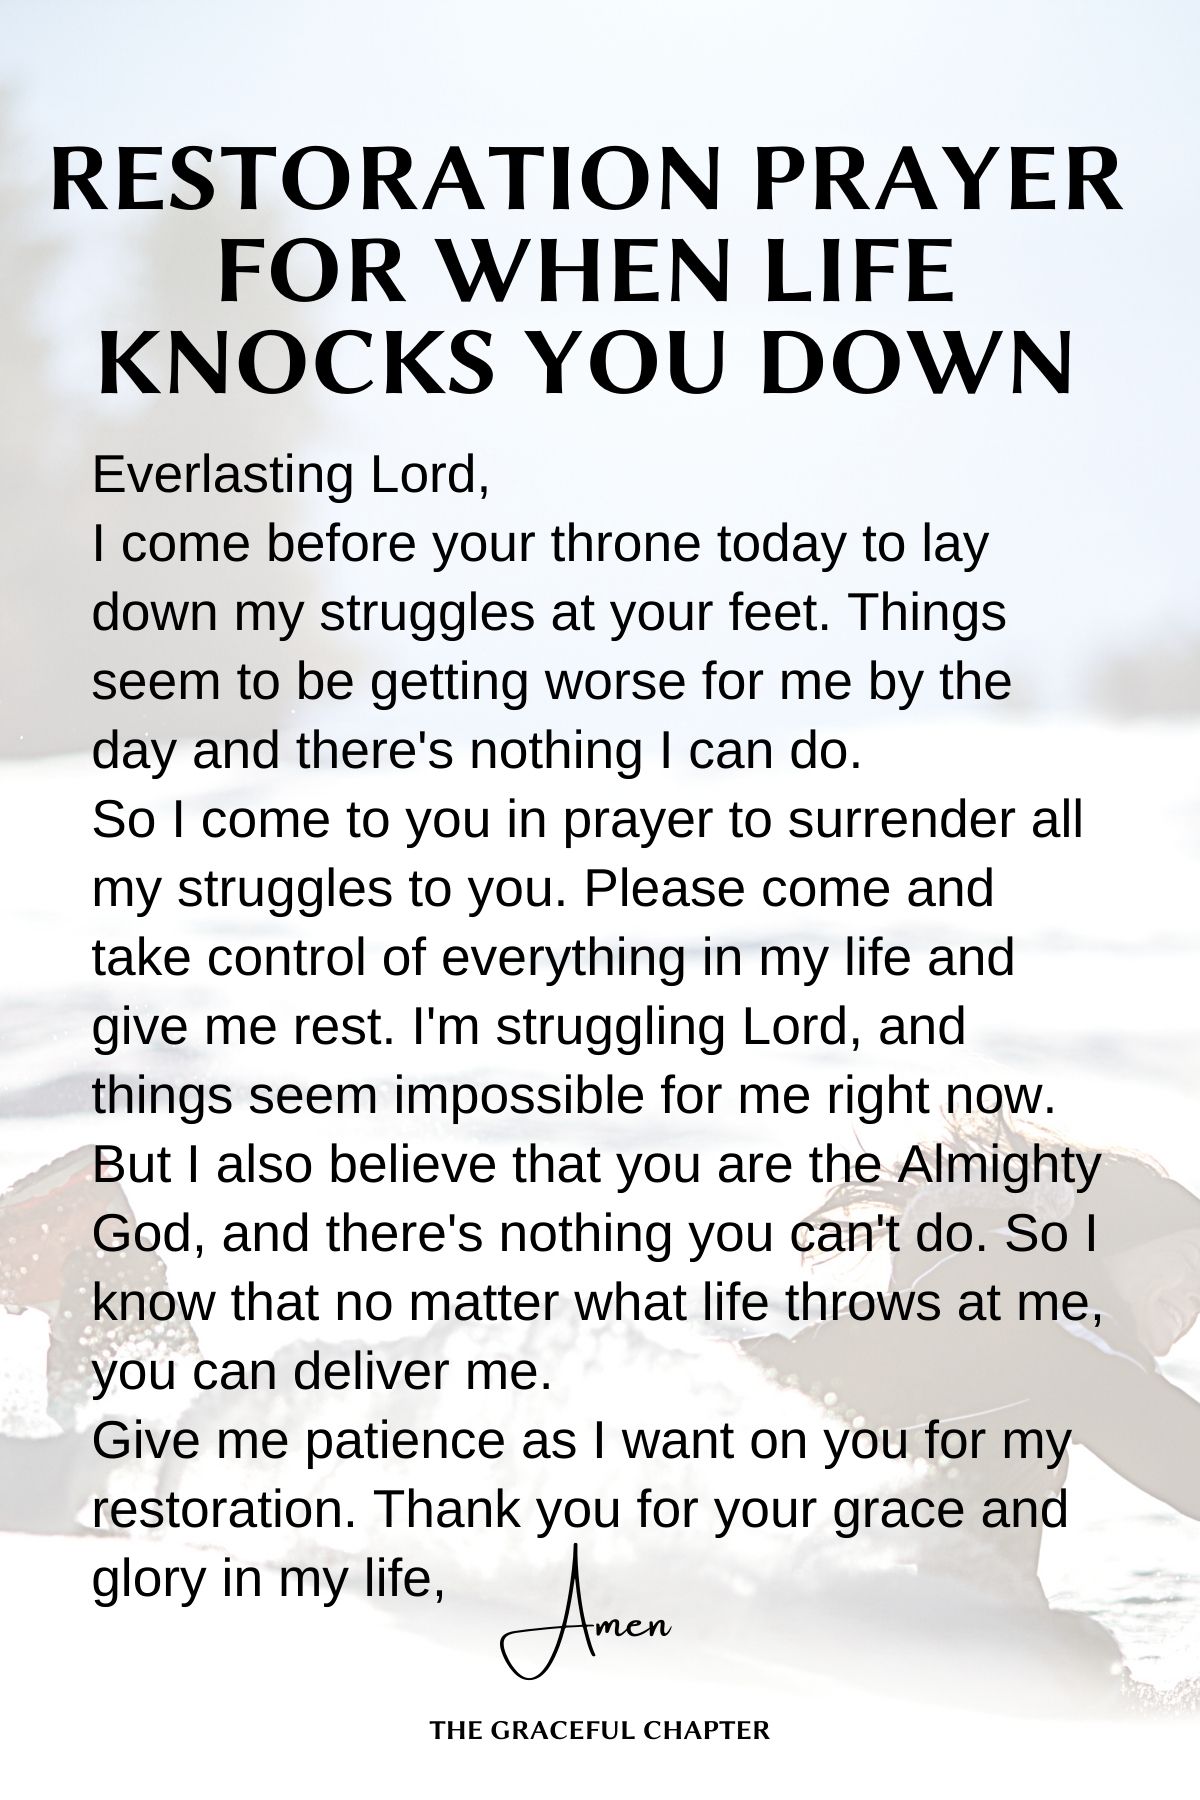 Restoration prayer for when life knocks you down